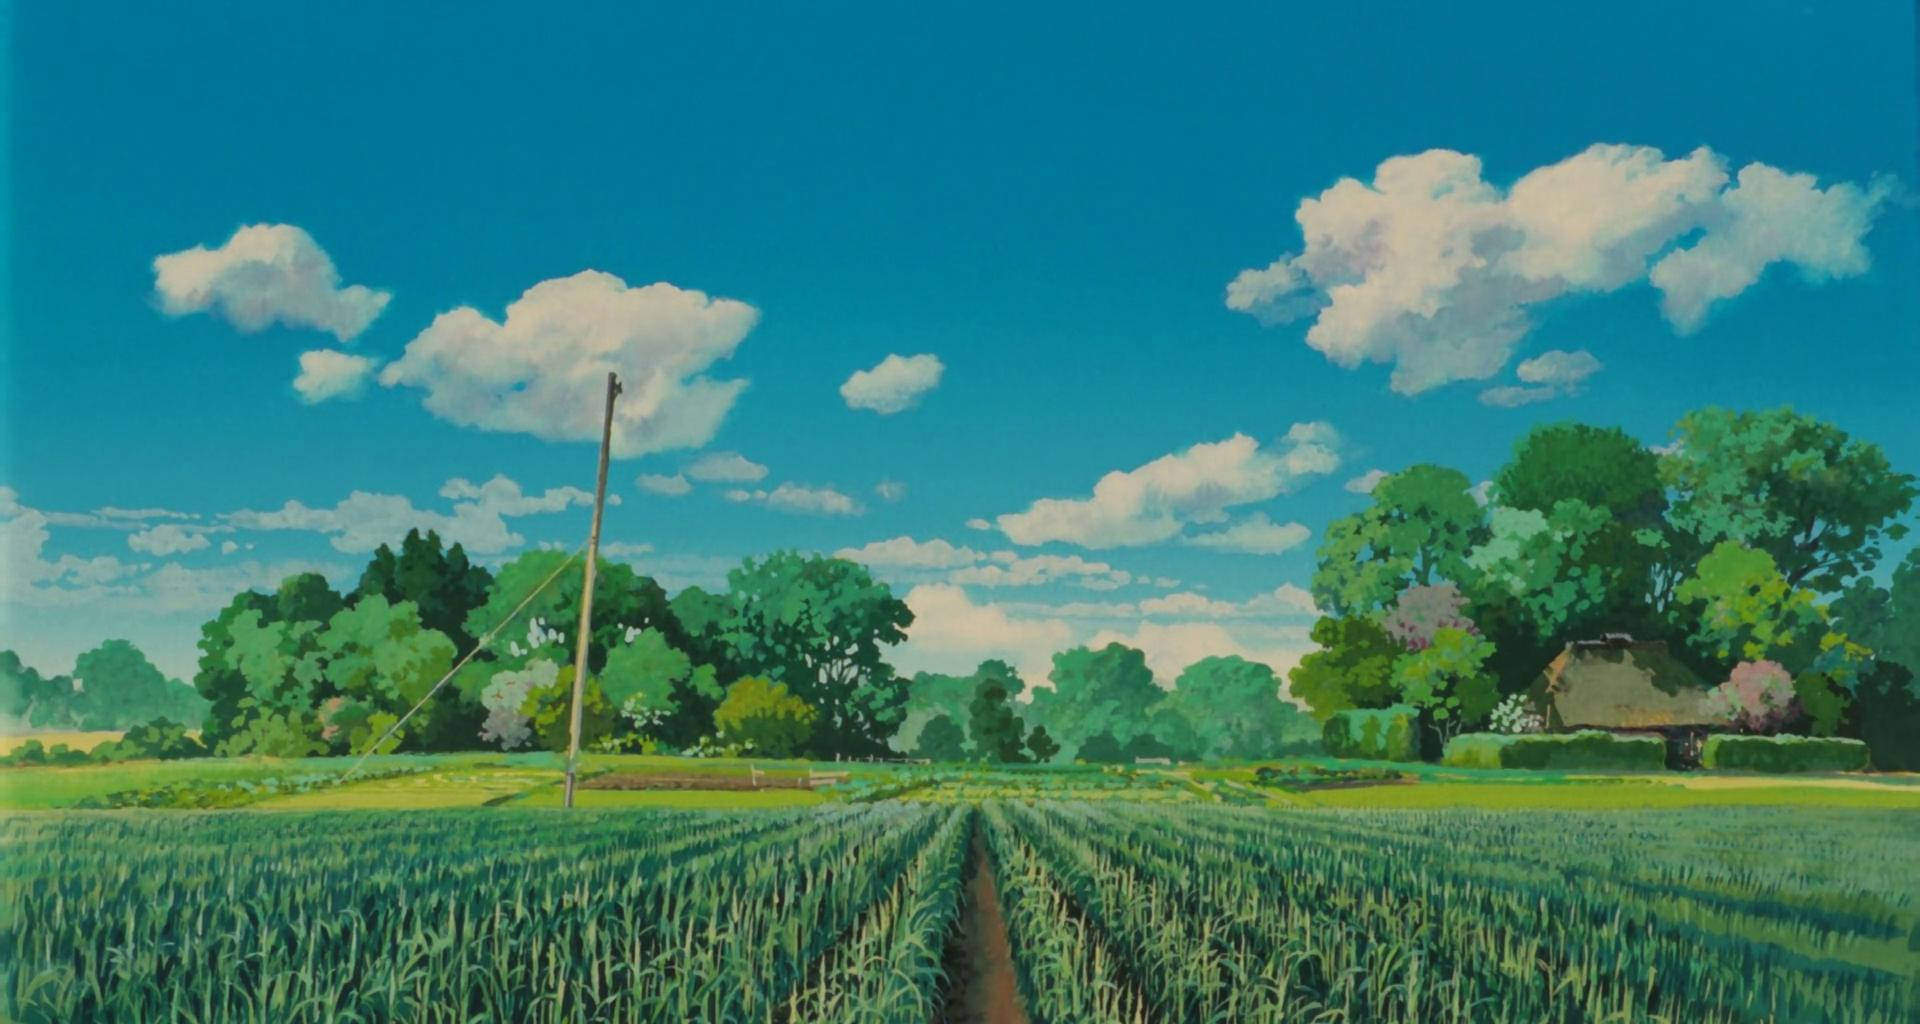 Studio Ghibli 1920X1024 Wallpaper and Background Image